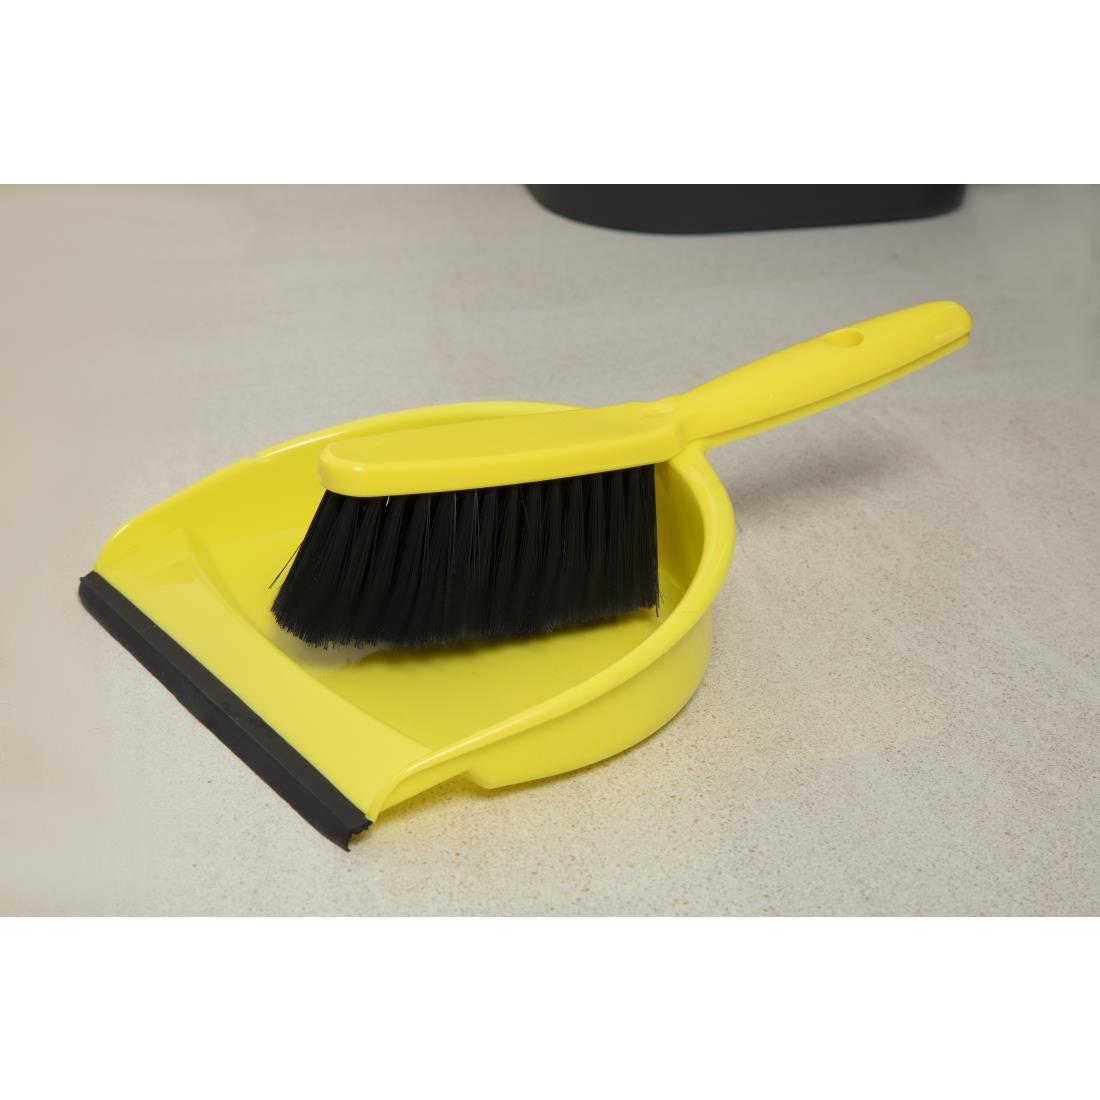 Jantex Soft Dustpan and Brush Set Yellow - CC930  - 2